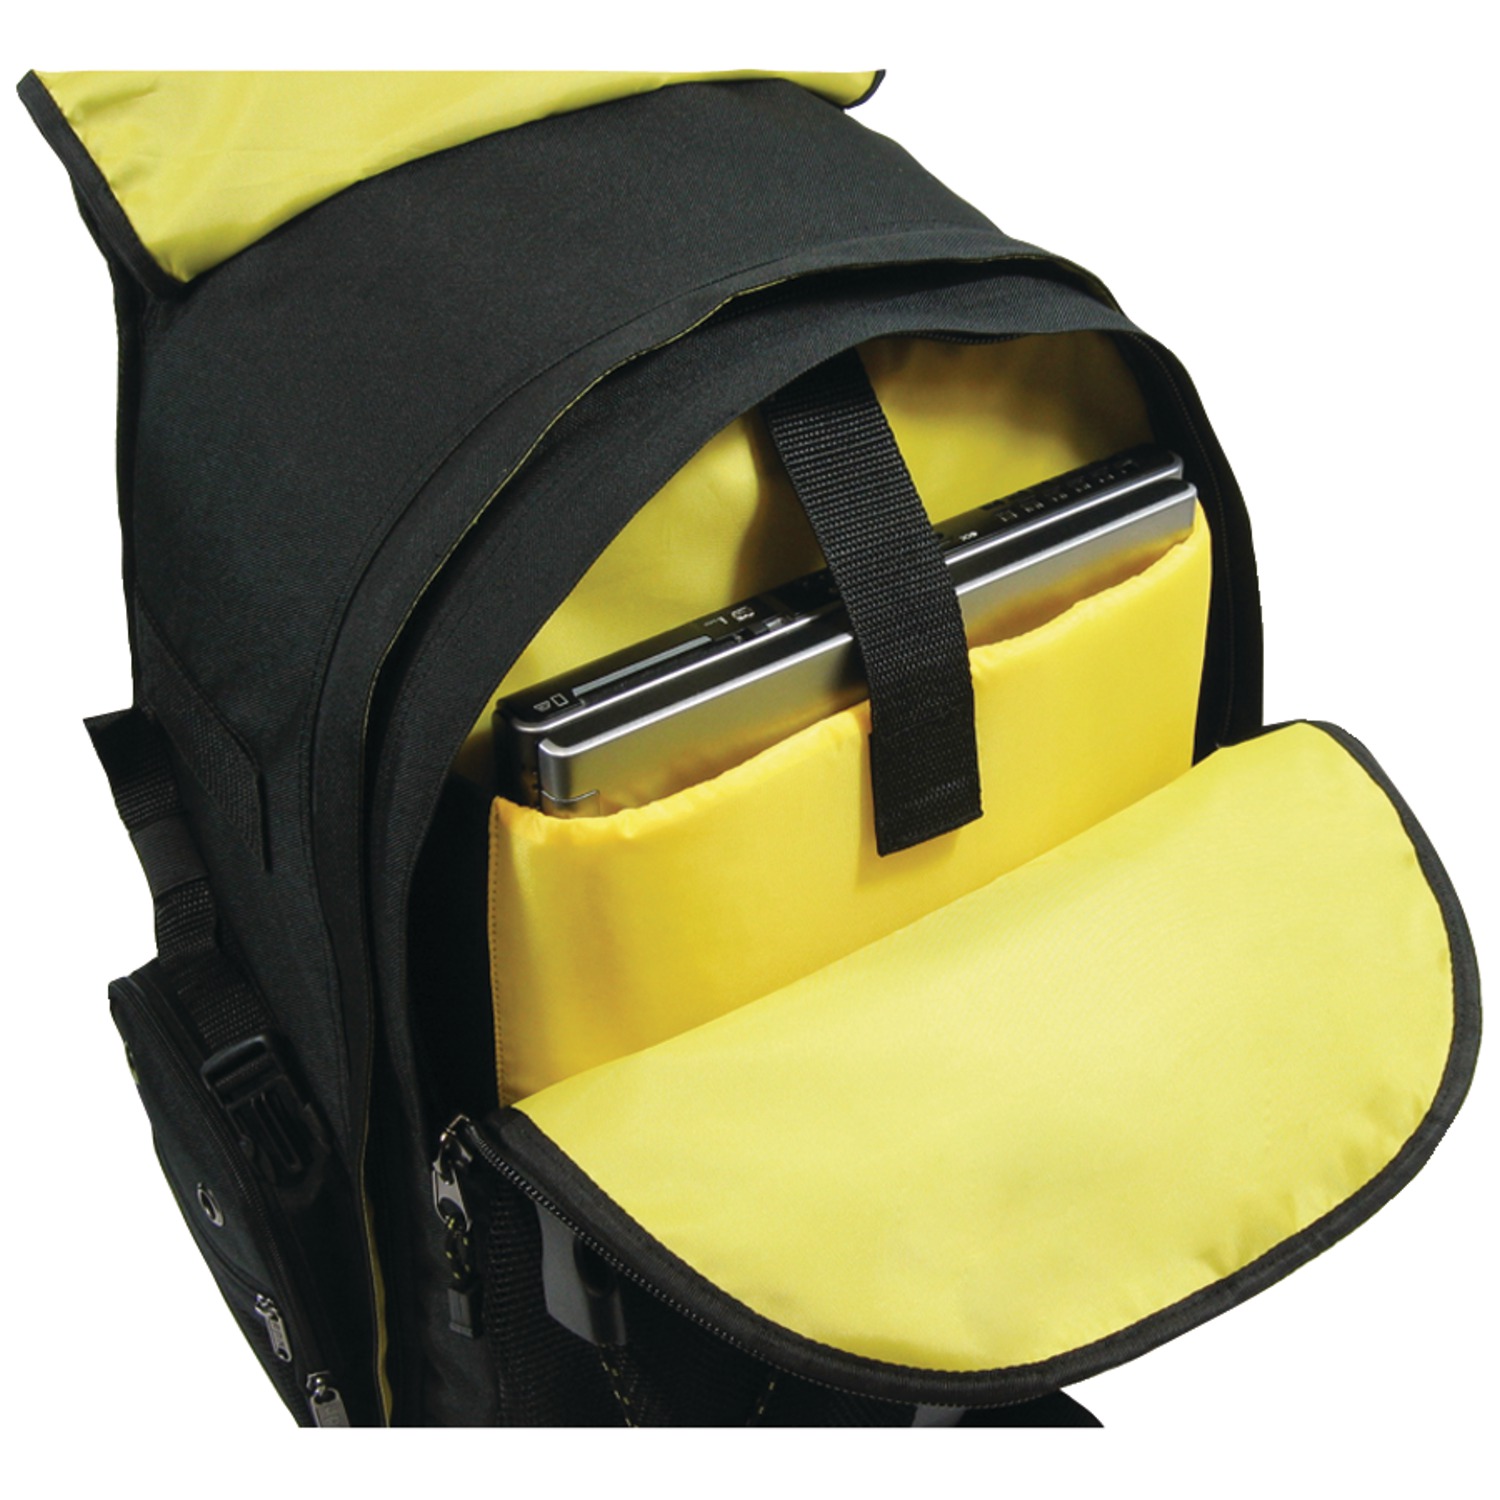 Ape Case Digital SLR and Laptop Backpack, ACPRO2000 - image 3 of 3